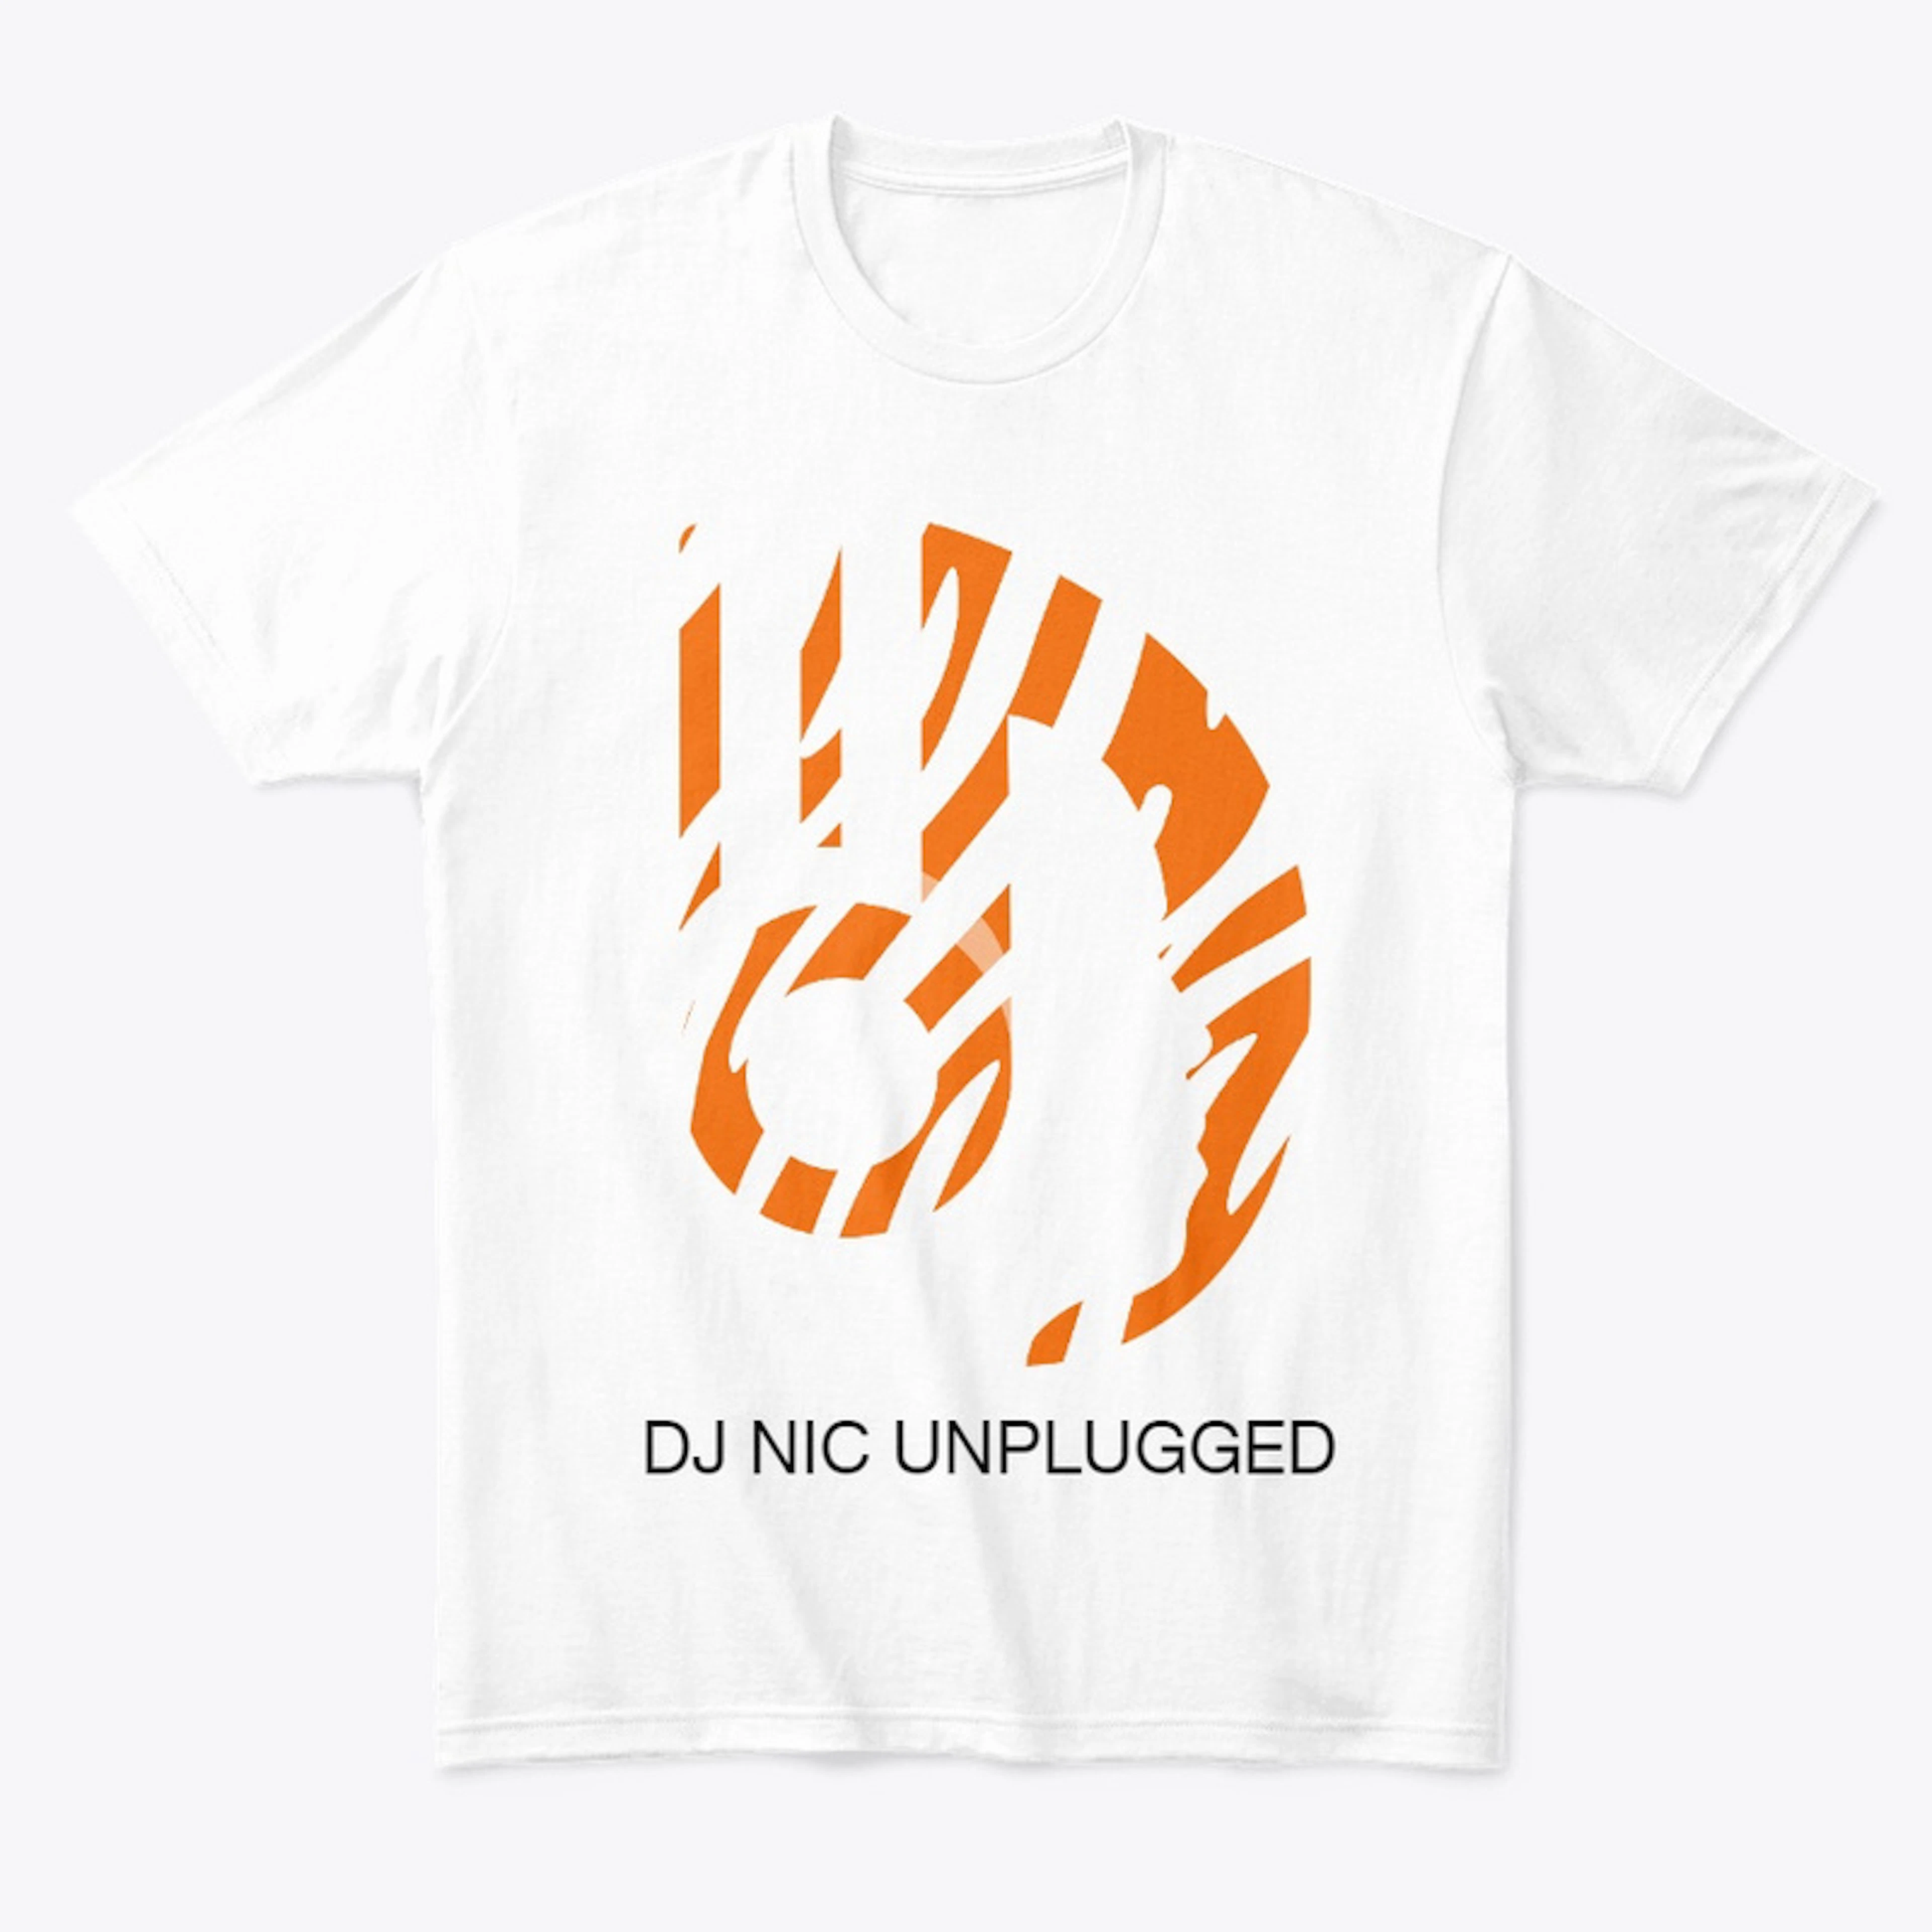 DJ NIC UNPLUGGED "ALL IN"